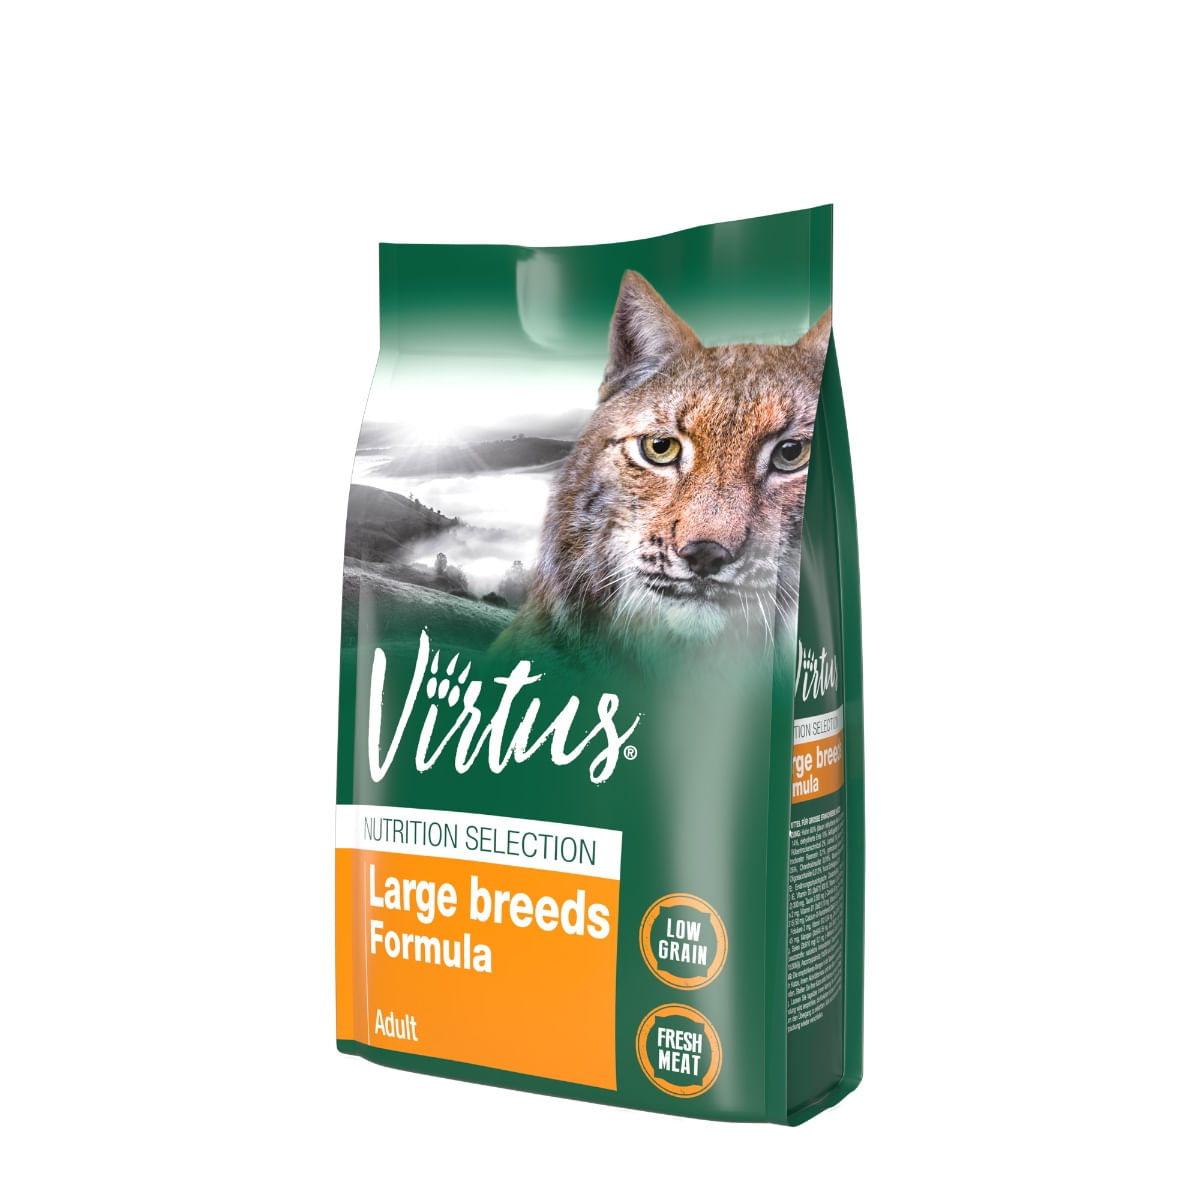 Virtus Cat Nutrition Selection Large Breeds Formula